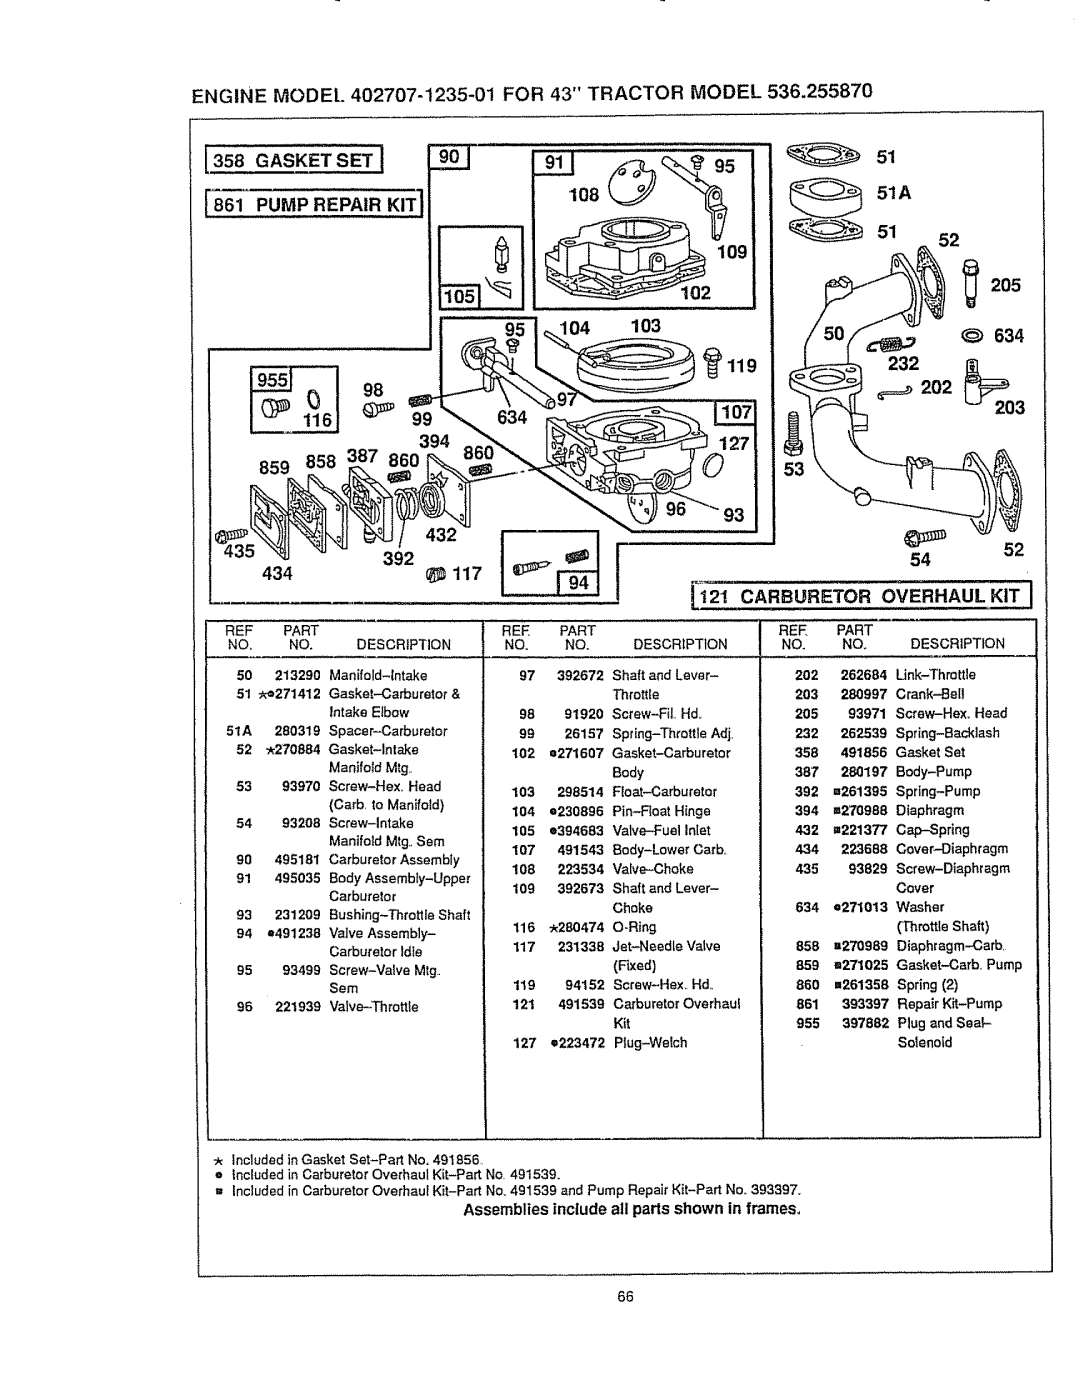 Sears 536.25587 owner manual 19551..... I, Gasketset, Pump Repair 